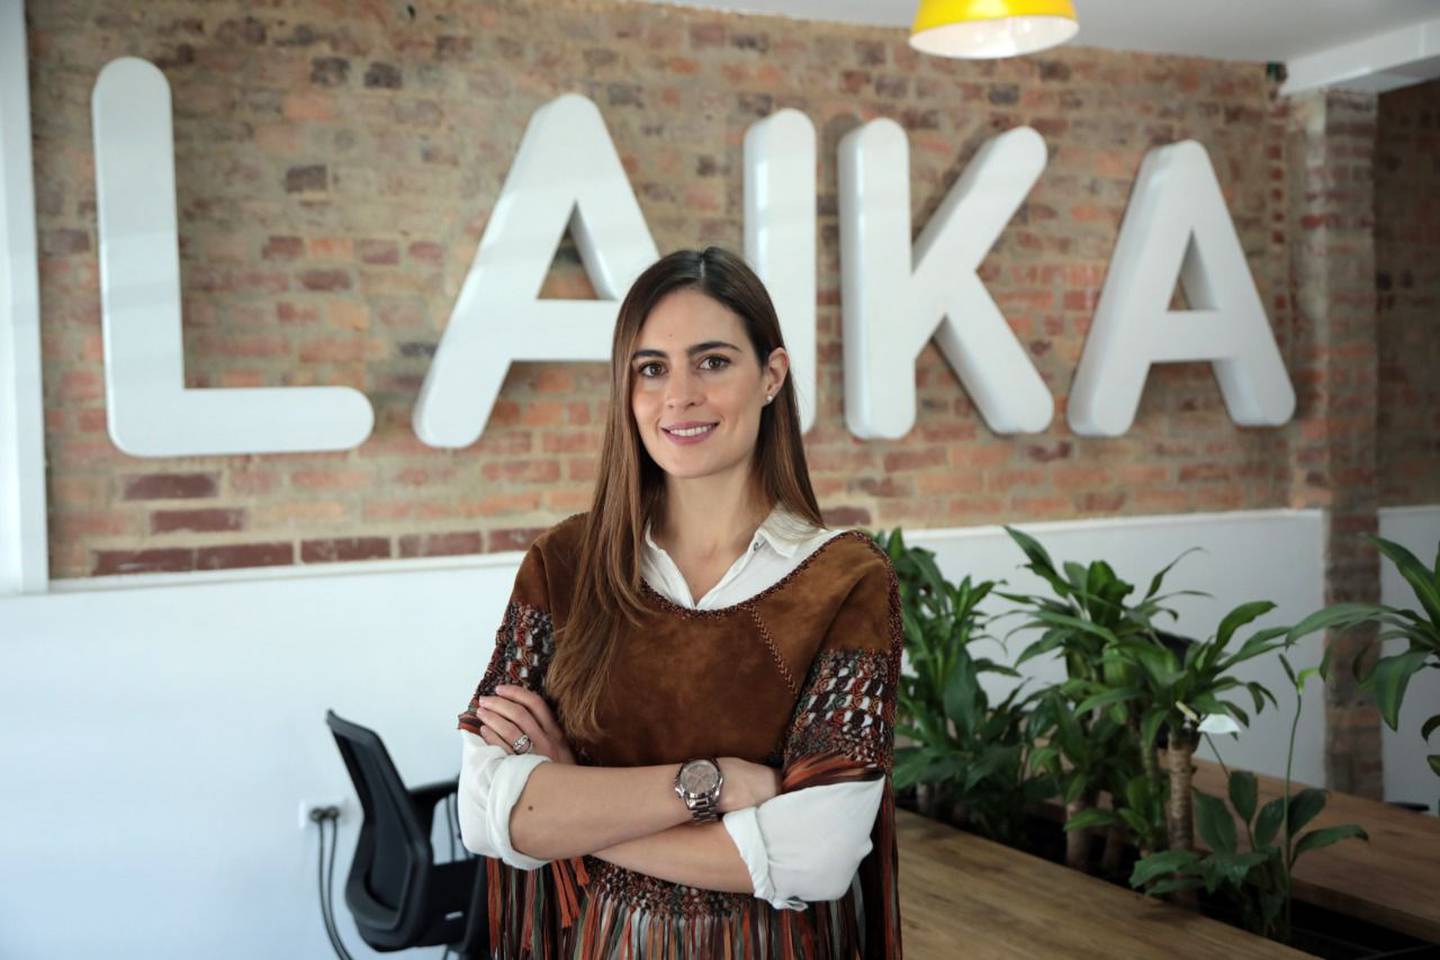 Manuela Sánchez, co-founder of Laika